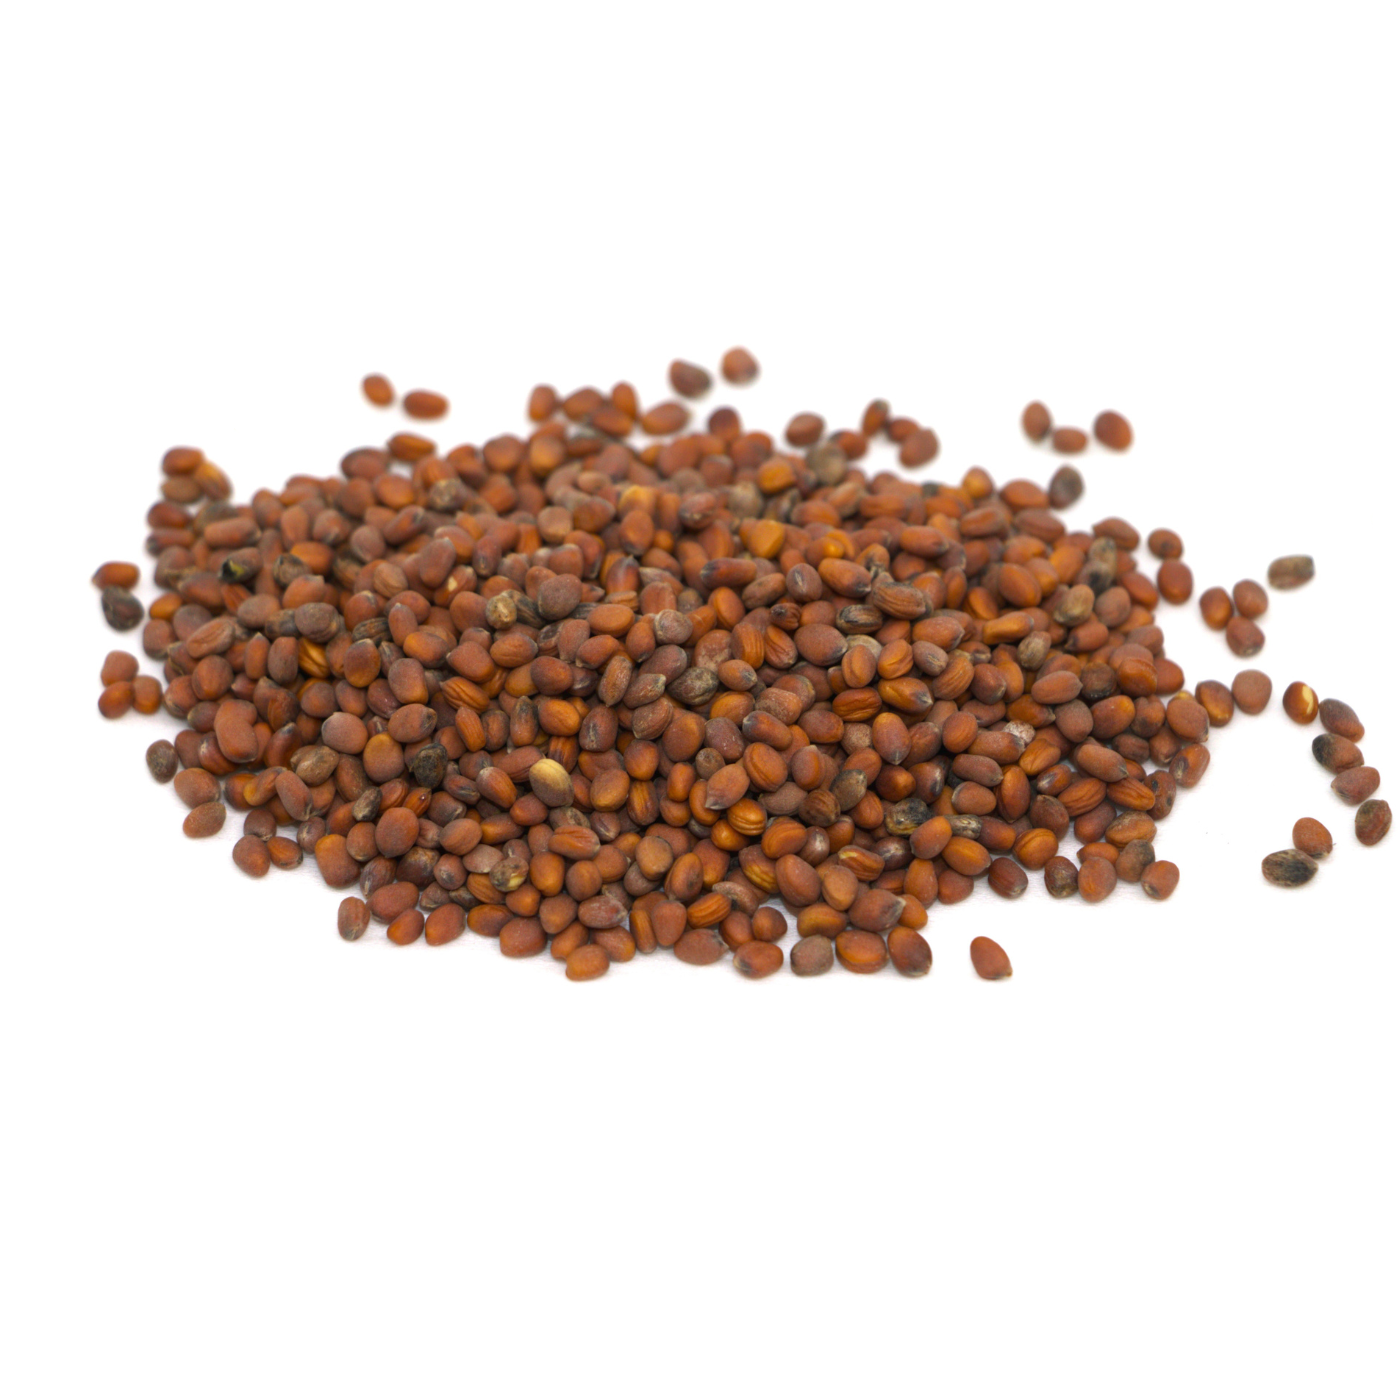 Radish daikon organic seeds